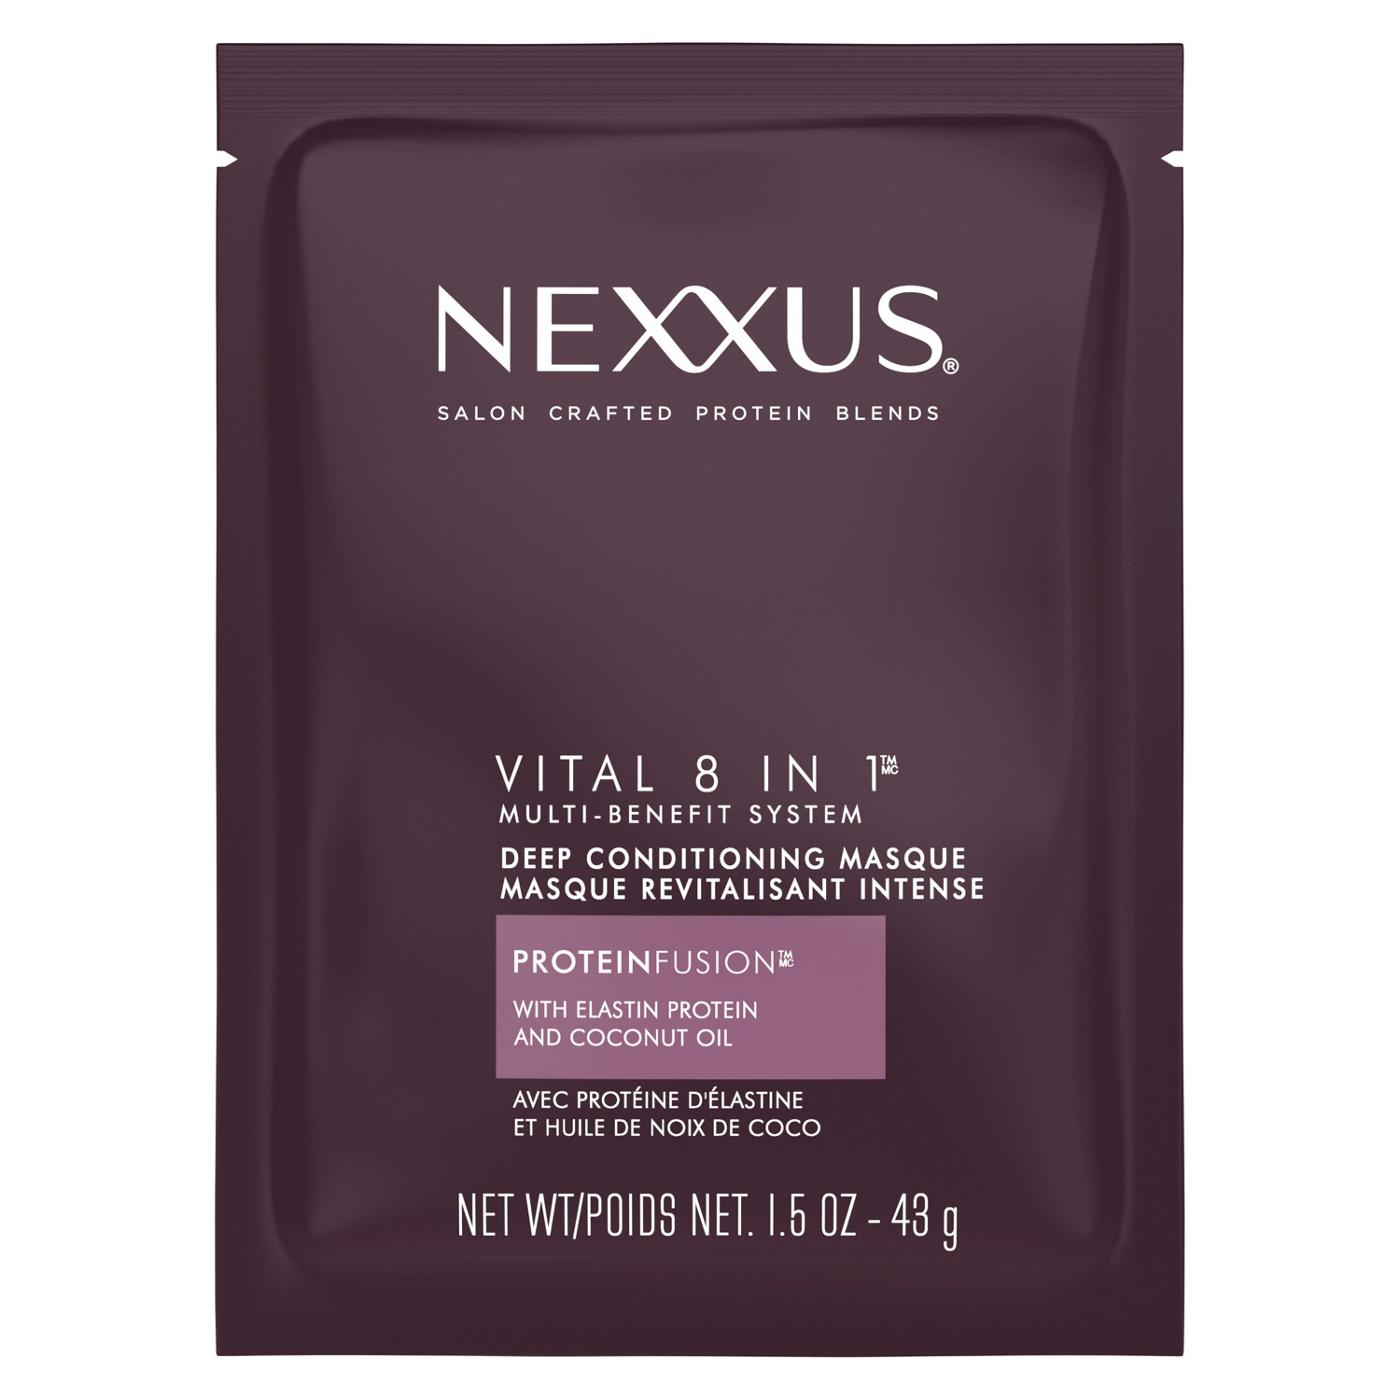 Nexxus Deep Conditioning Masque; image 1 of 3